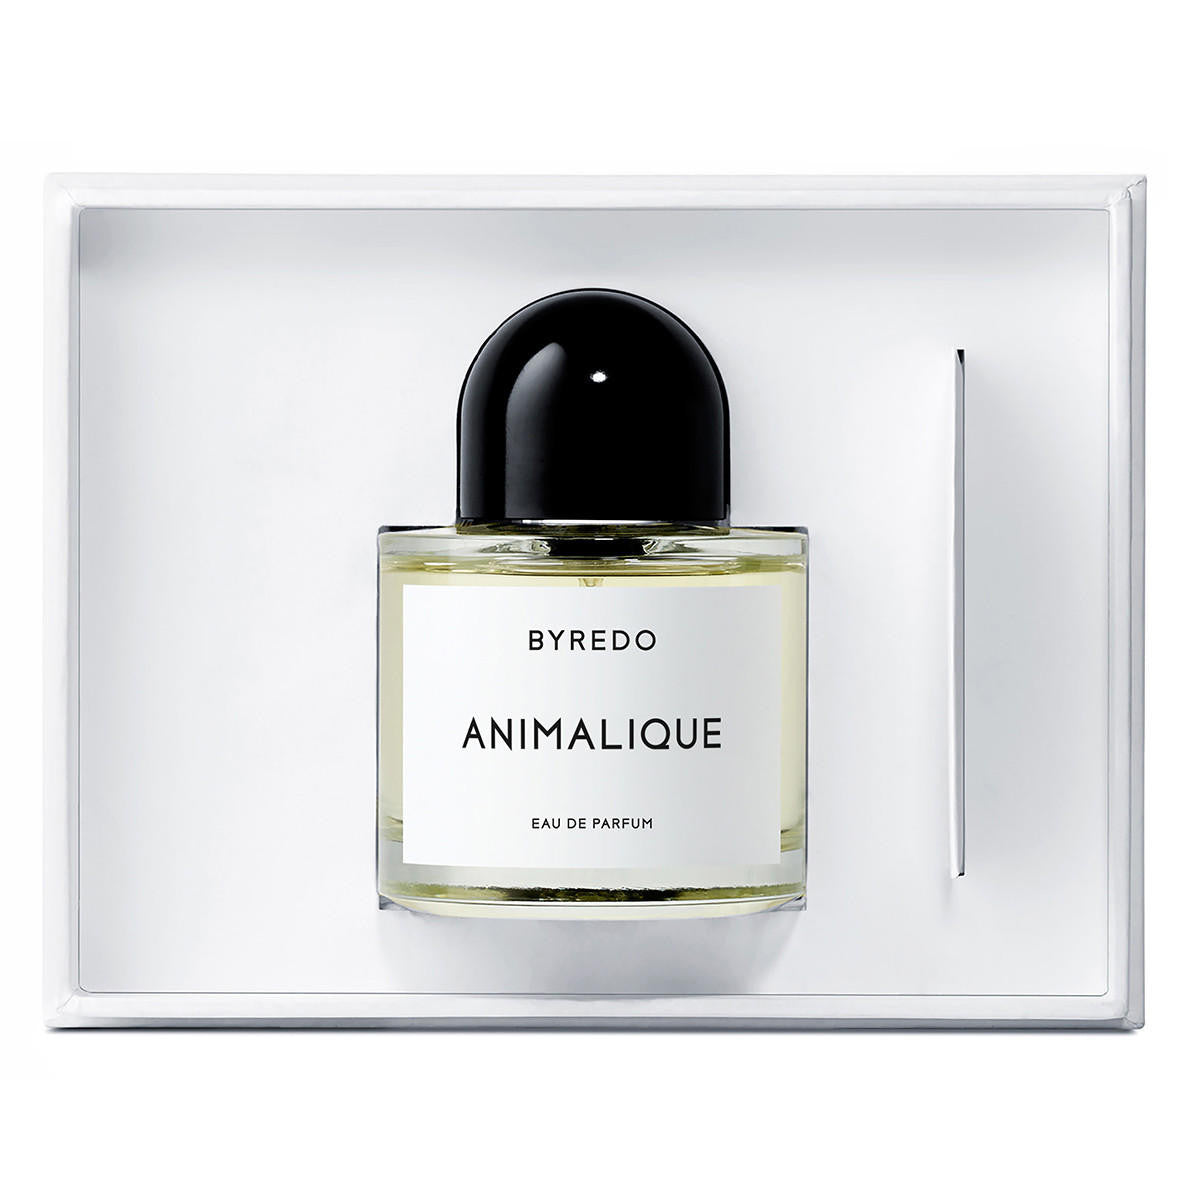  BYREDO Animalique Eau de Parfum 